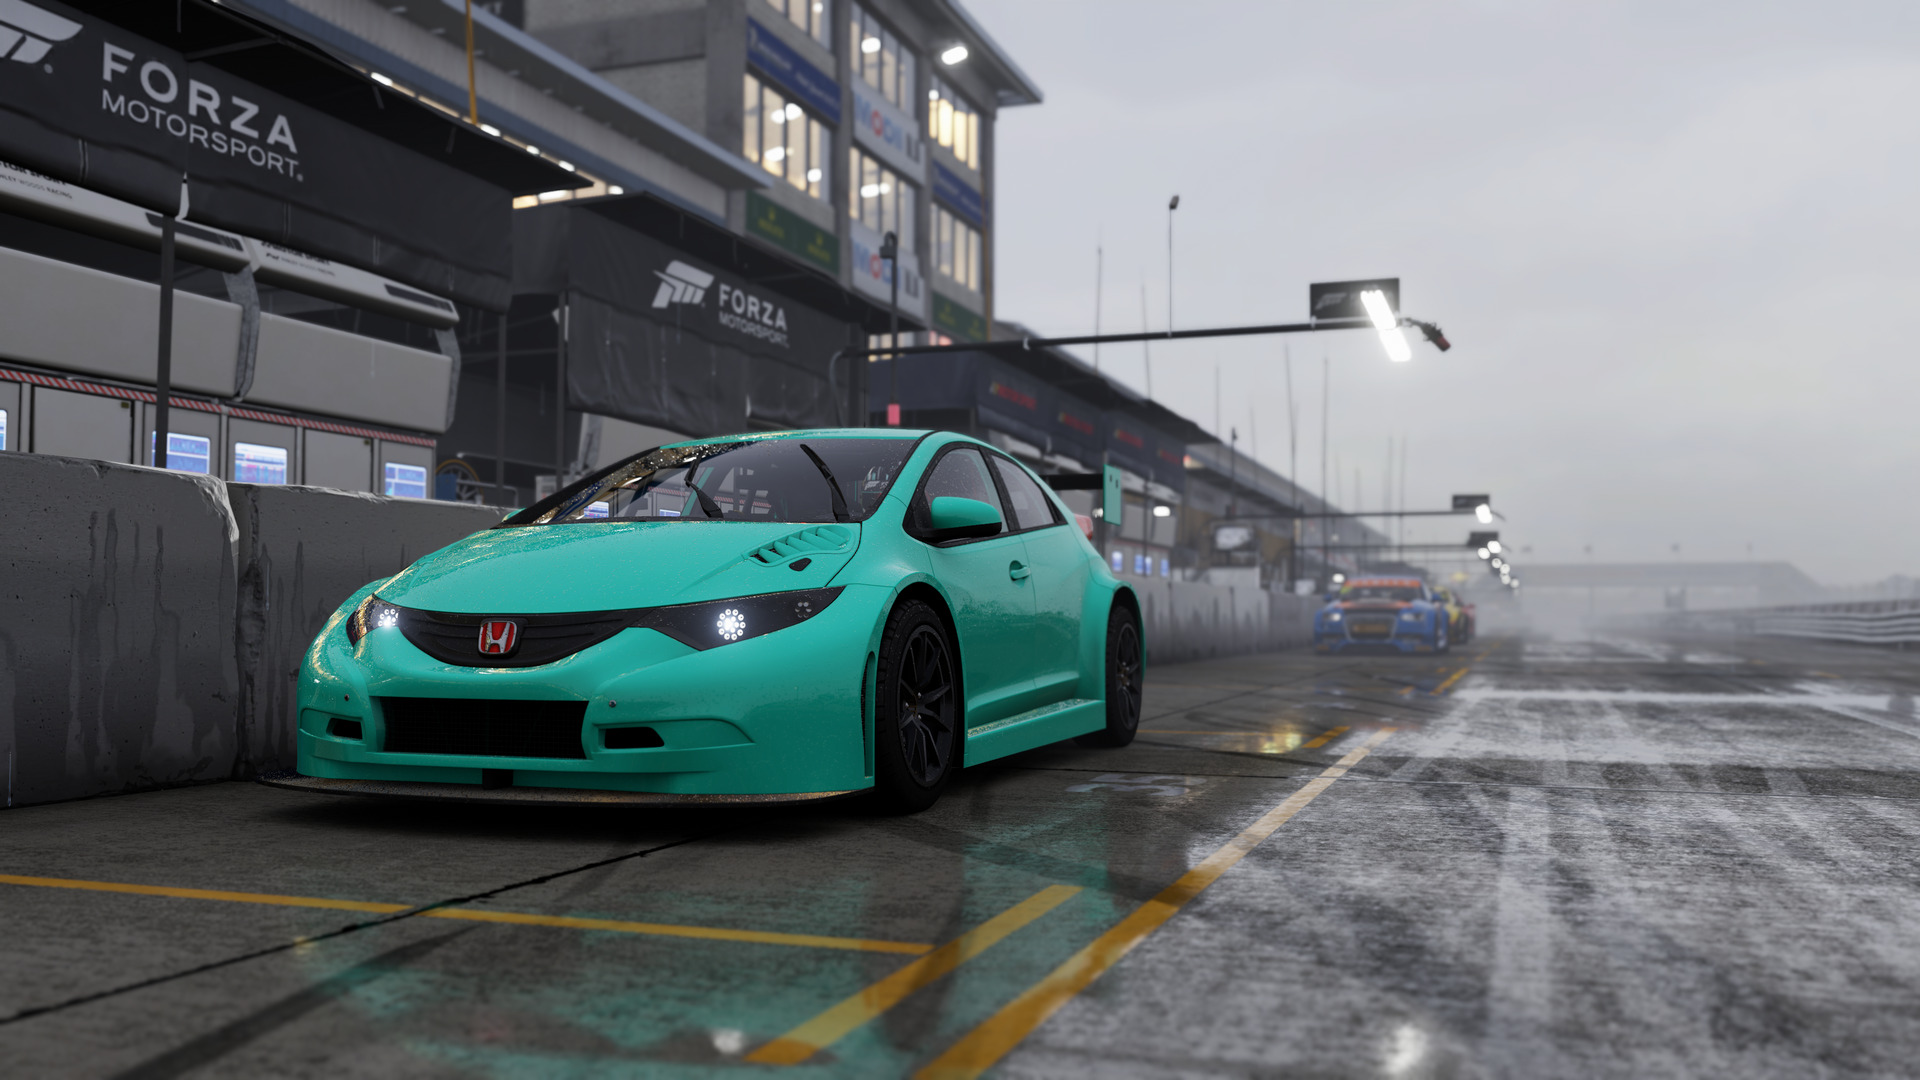 Forza Motorsport 6 Apex PC Trailer 